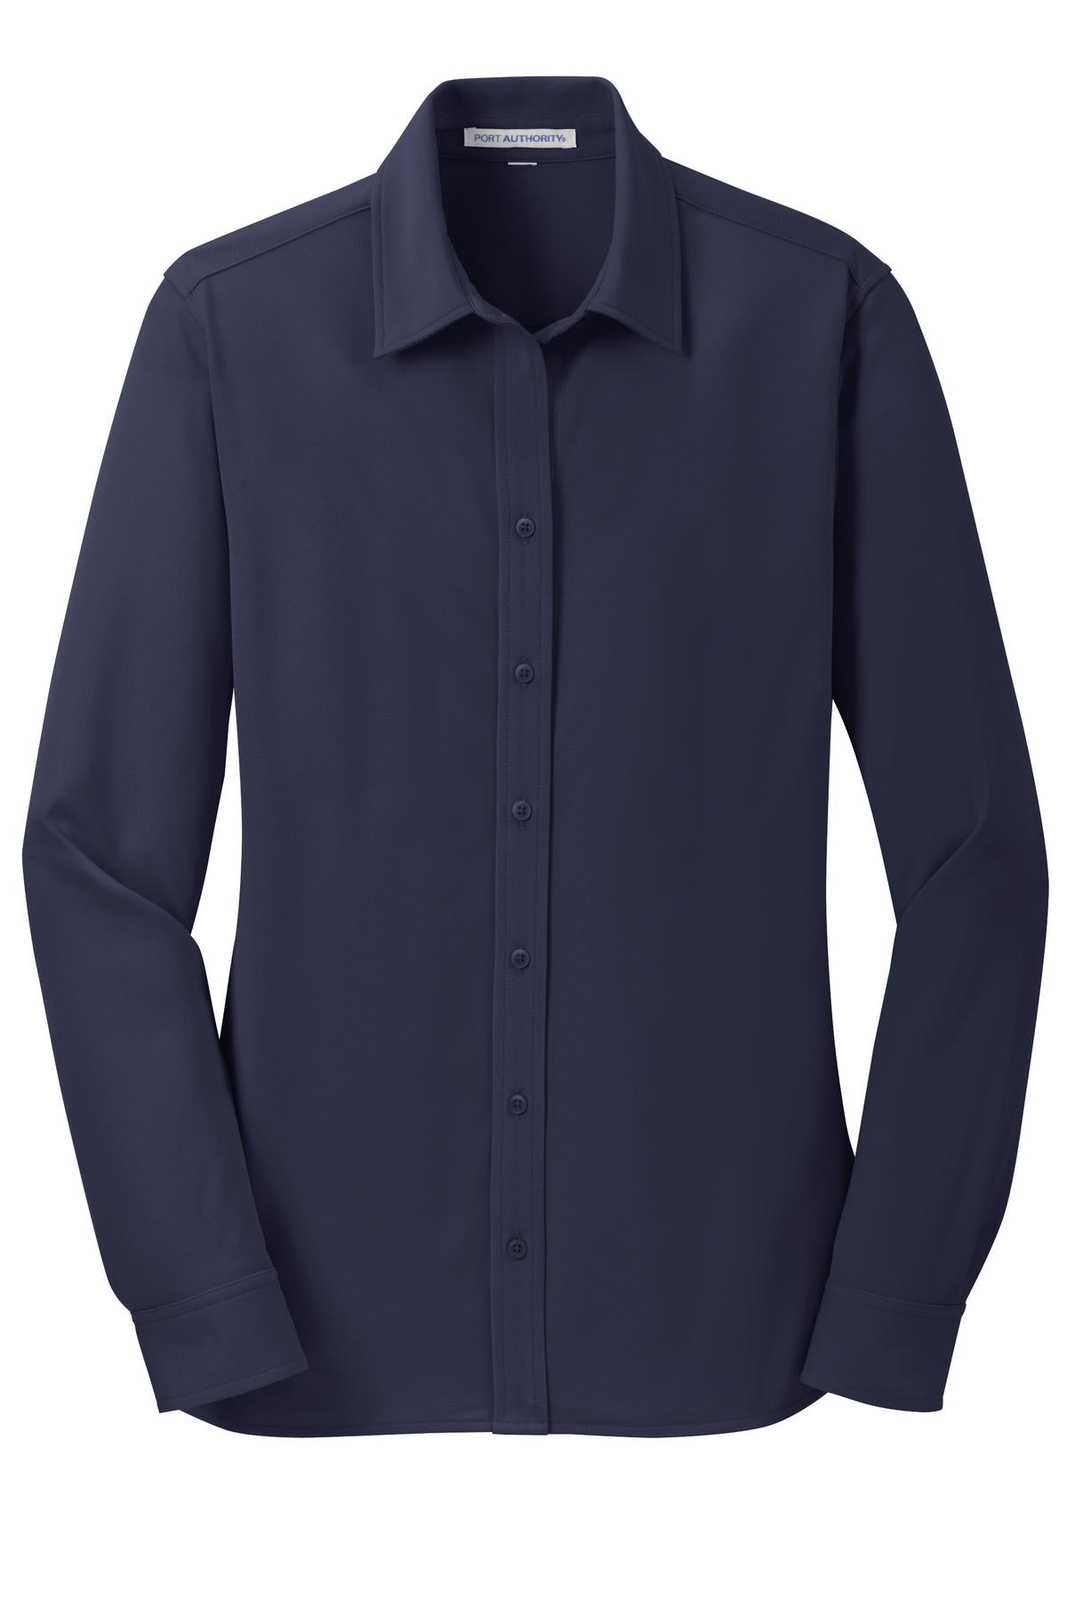 Port Authority L570 Ladies Dimension Knit Dress Shirt - Dark Navy - HIT a Double - 5